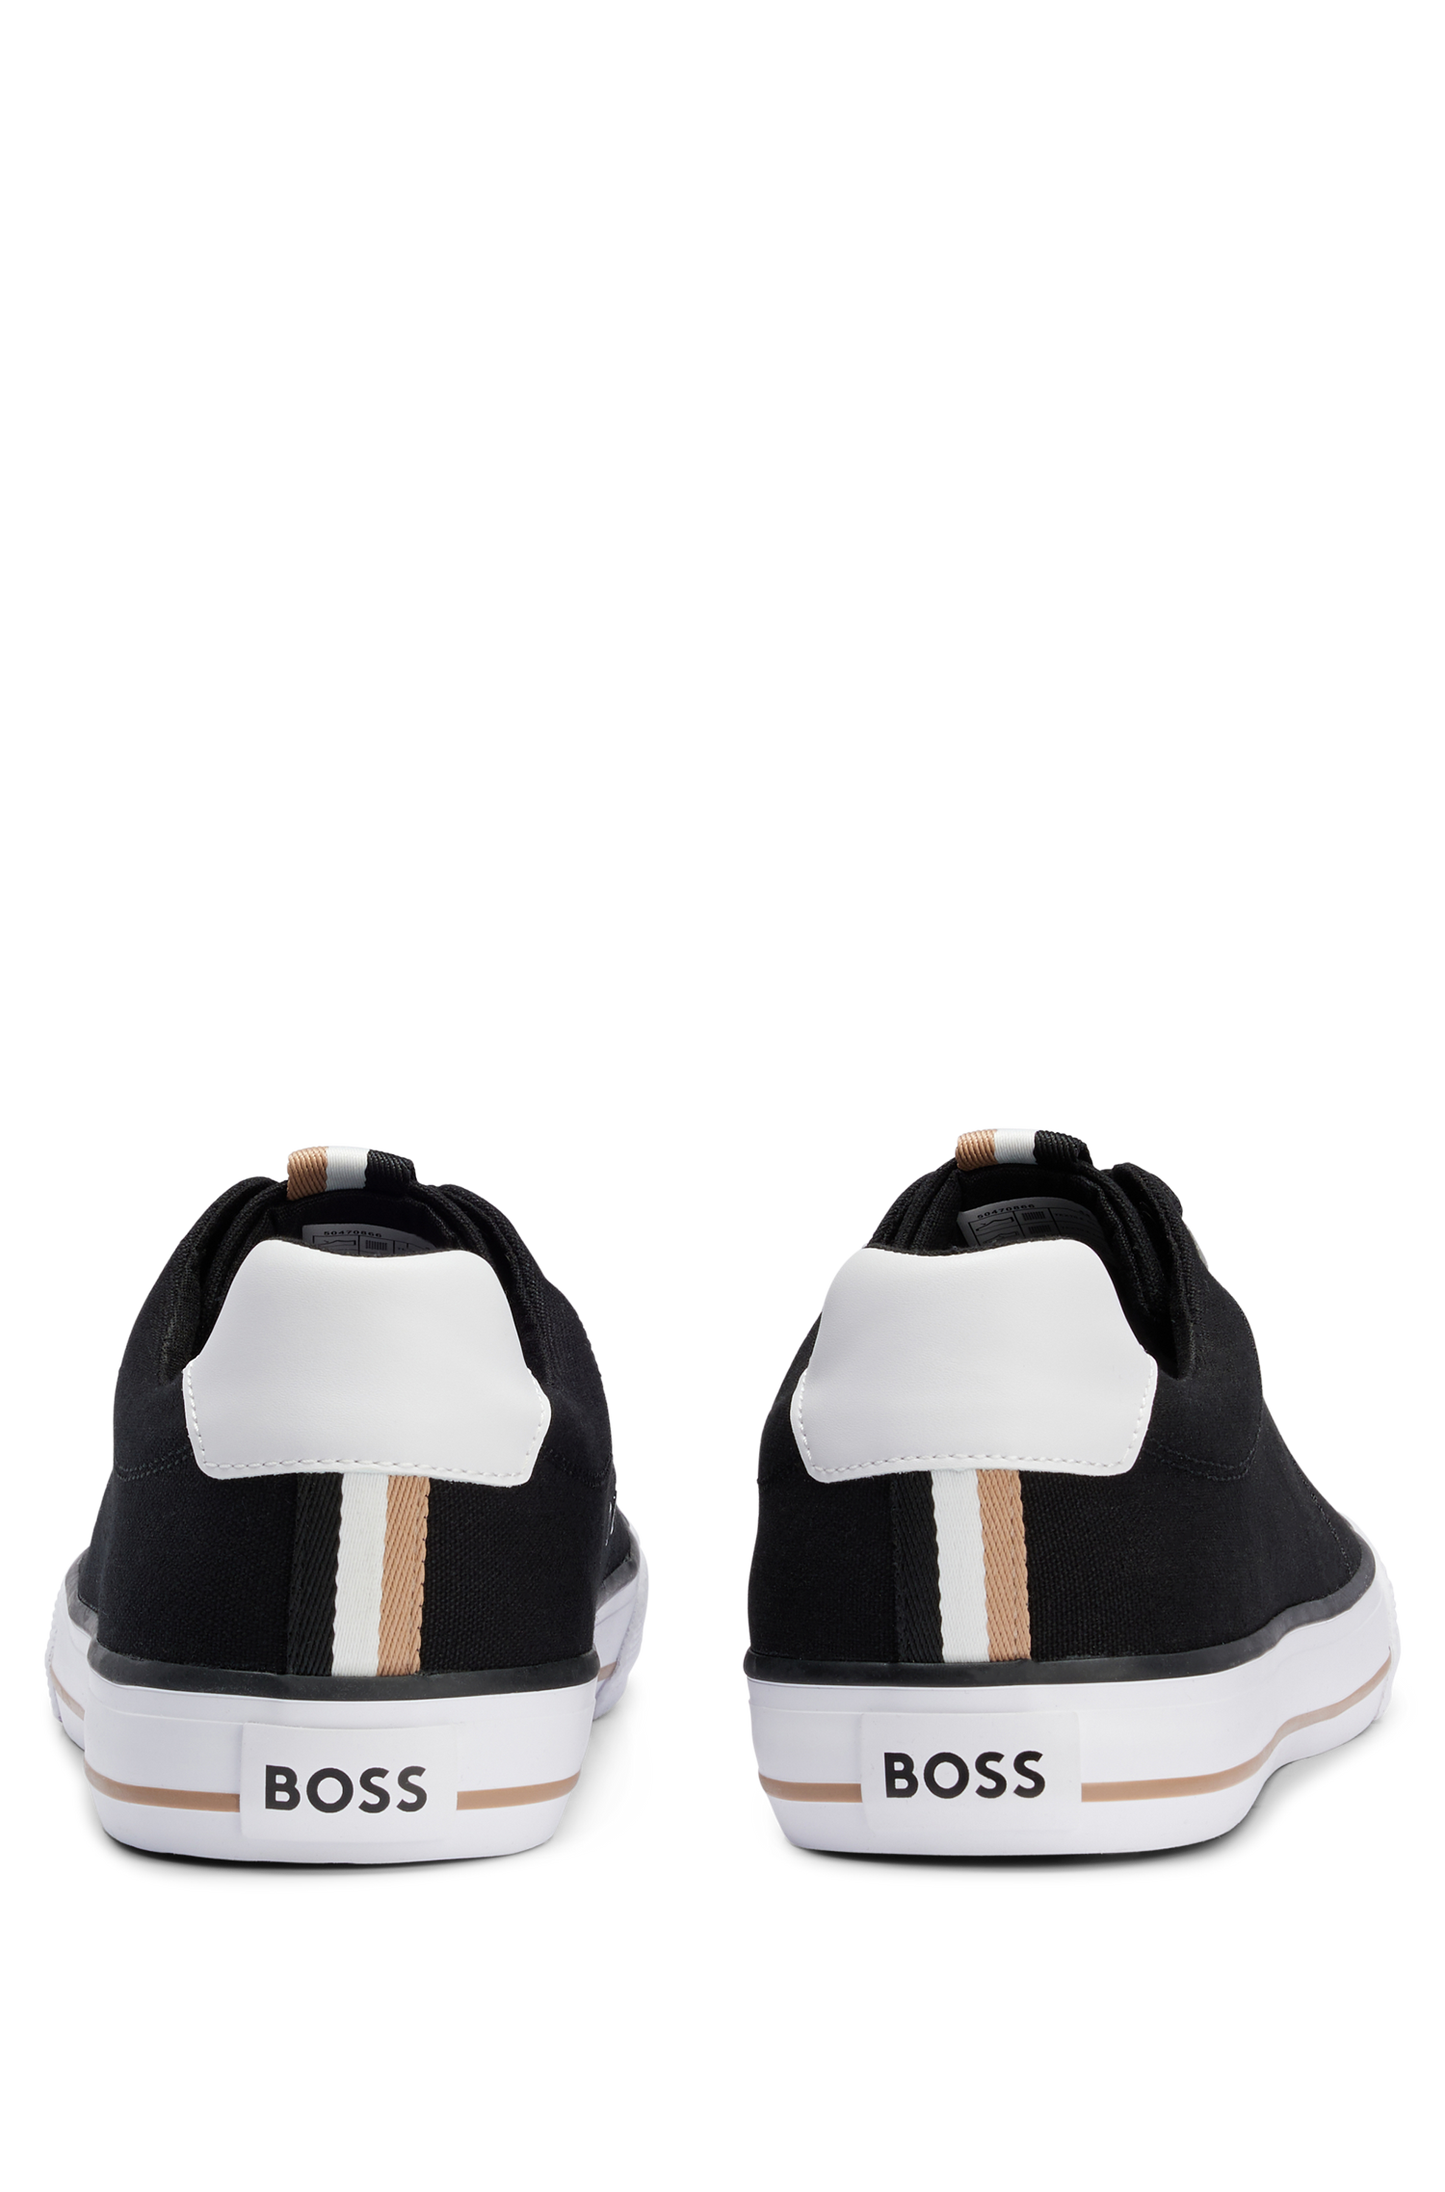 Boss Tennis Shoes - Aiden_Tenn_cv